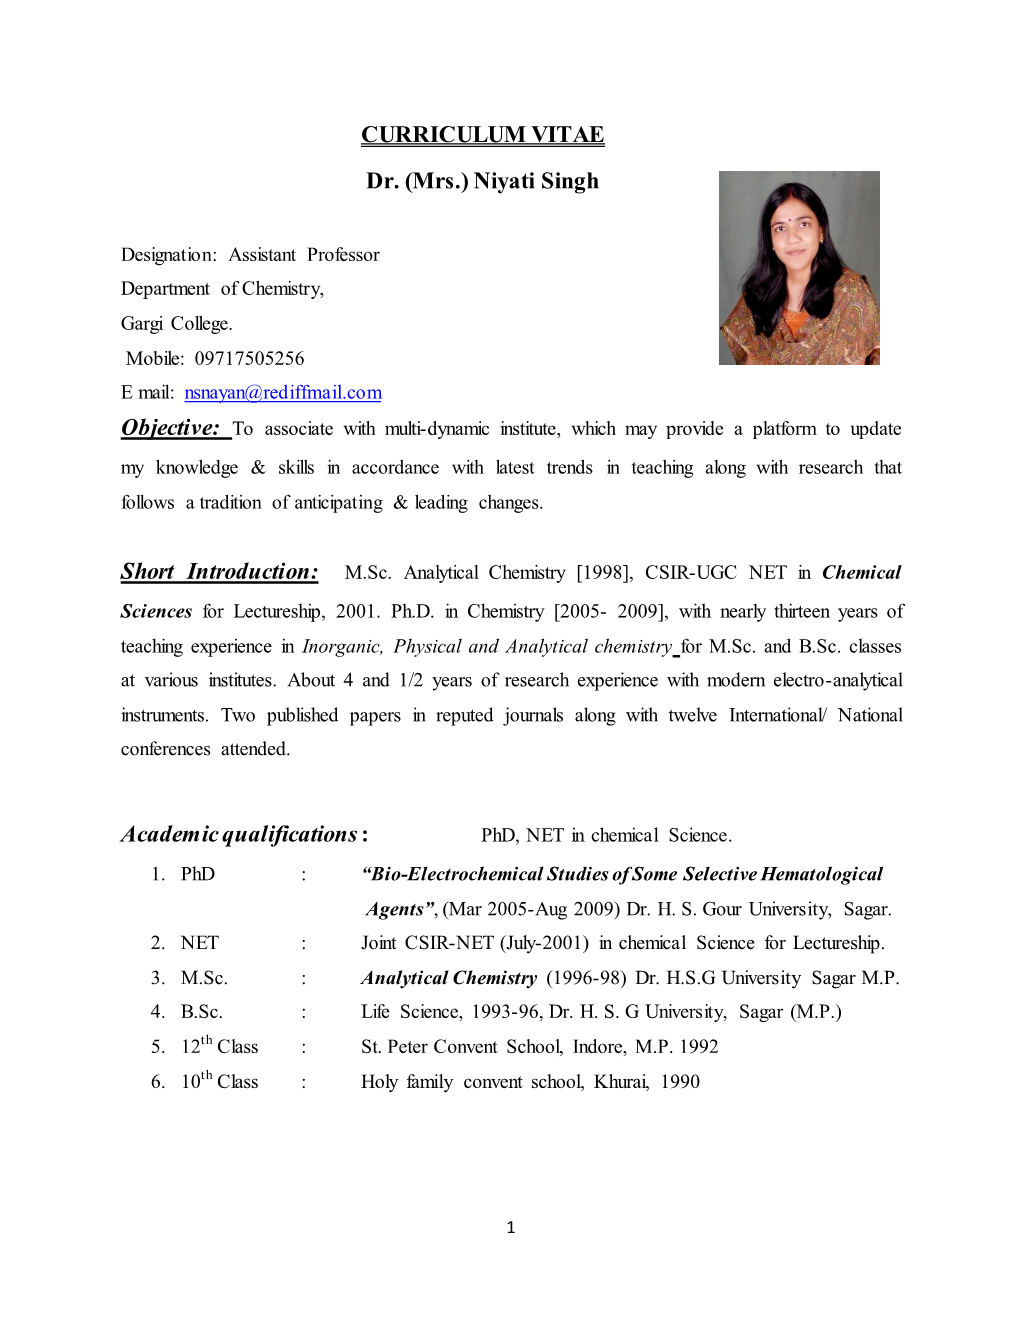 CURRICULUM VITAE Dr. (Mrs.) Niyati Singh Academic Qualifications